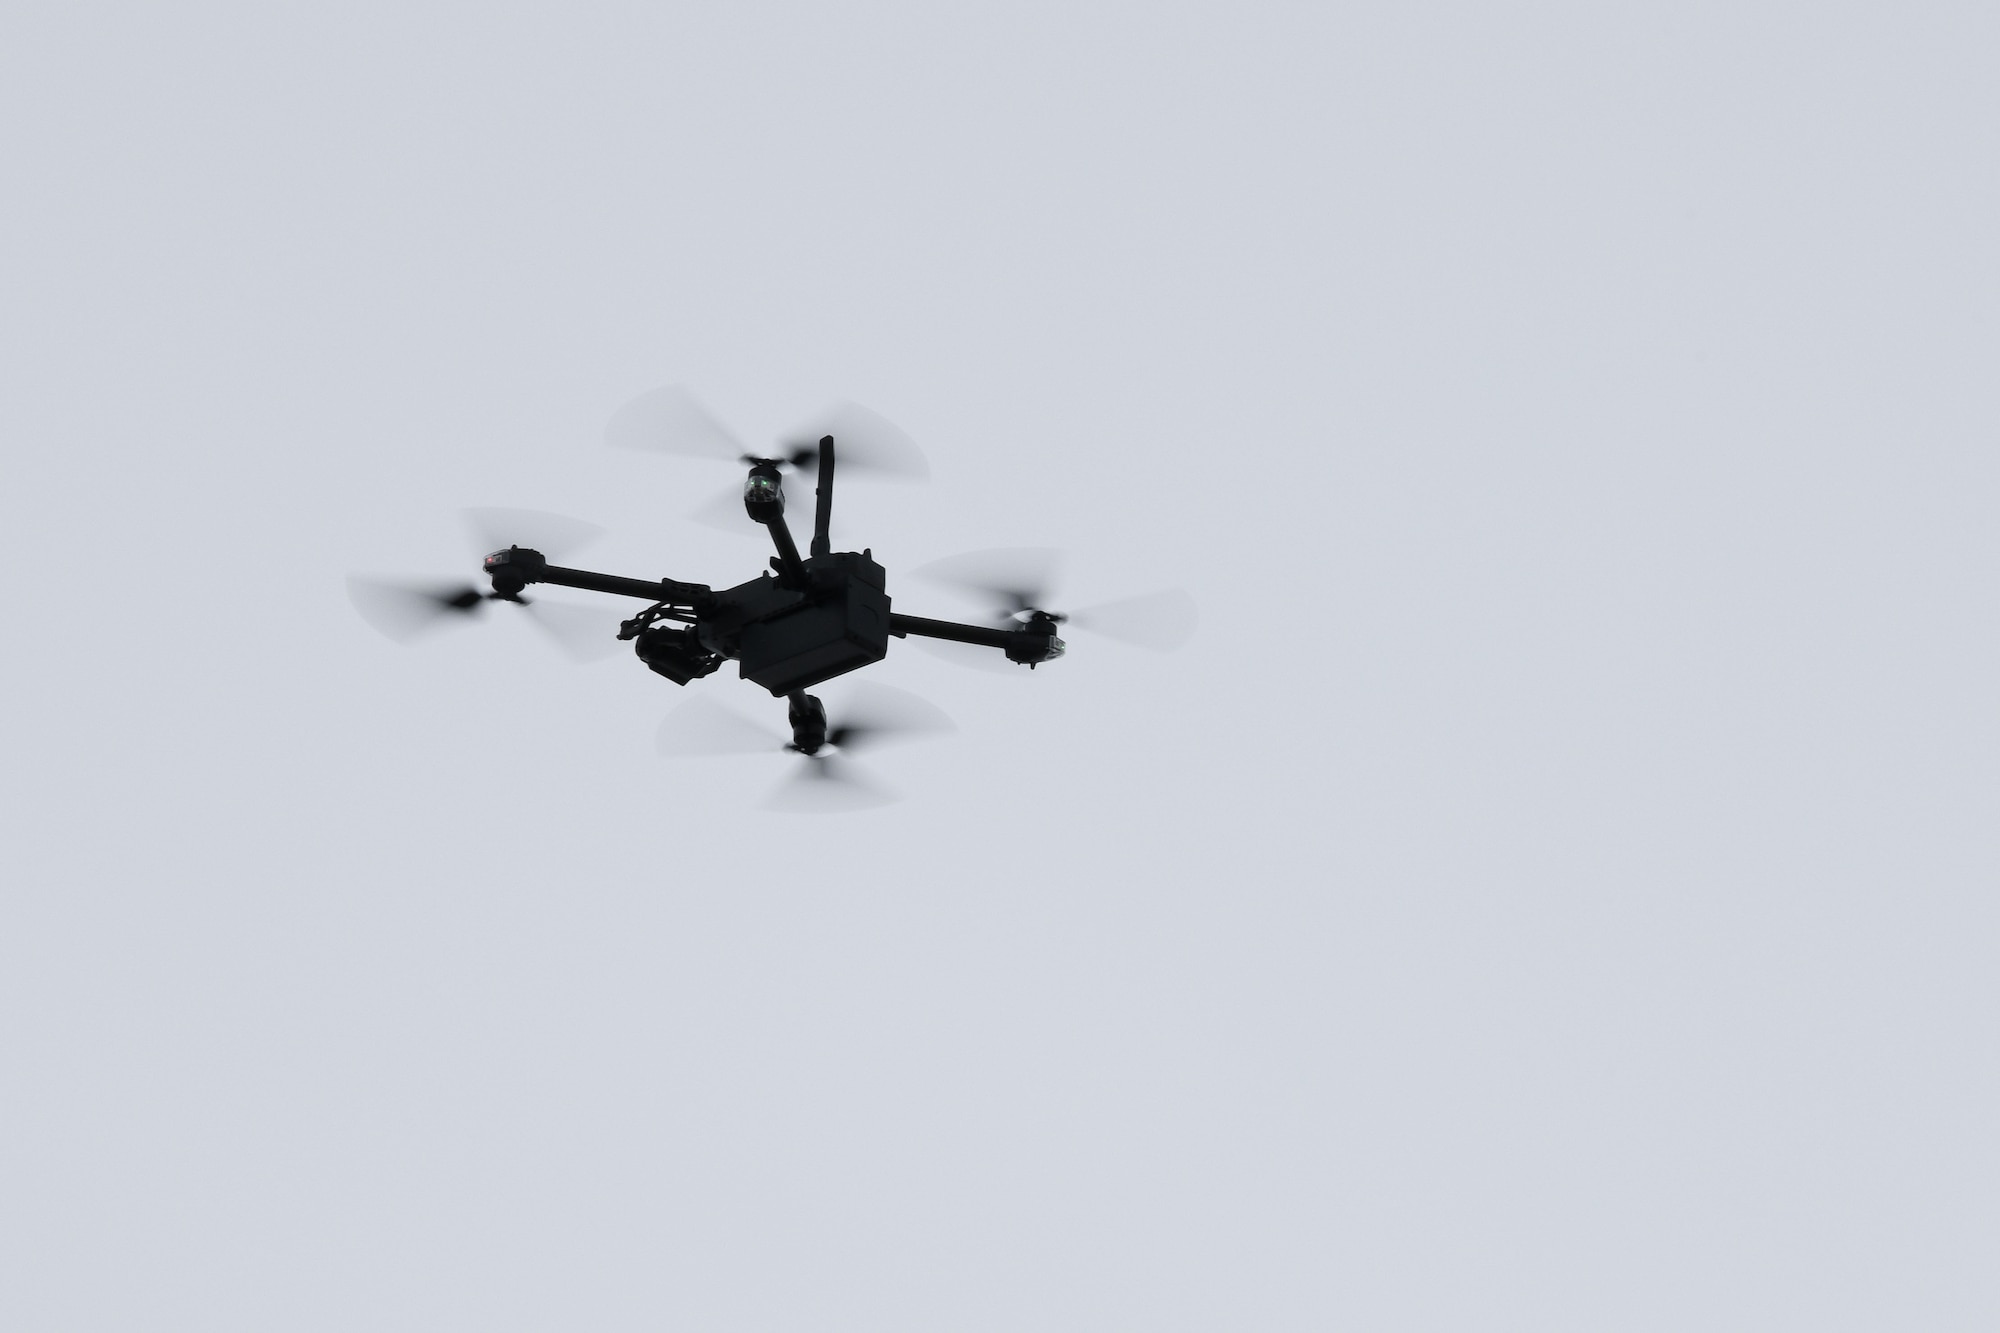 Drone flies in air